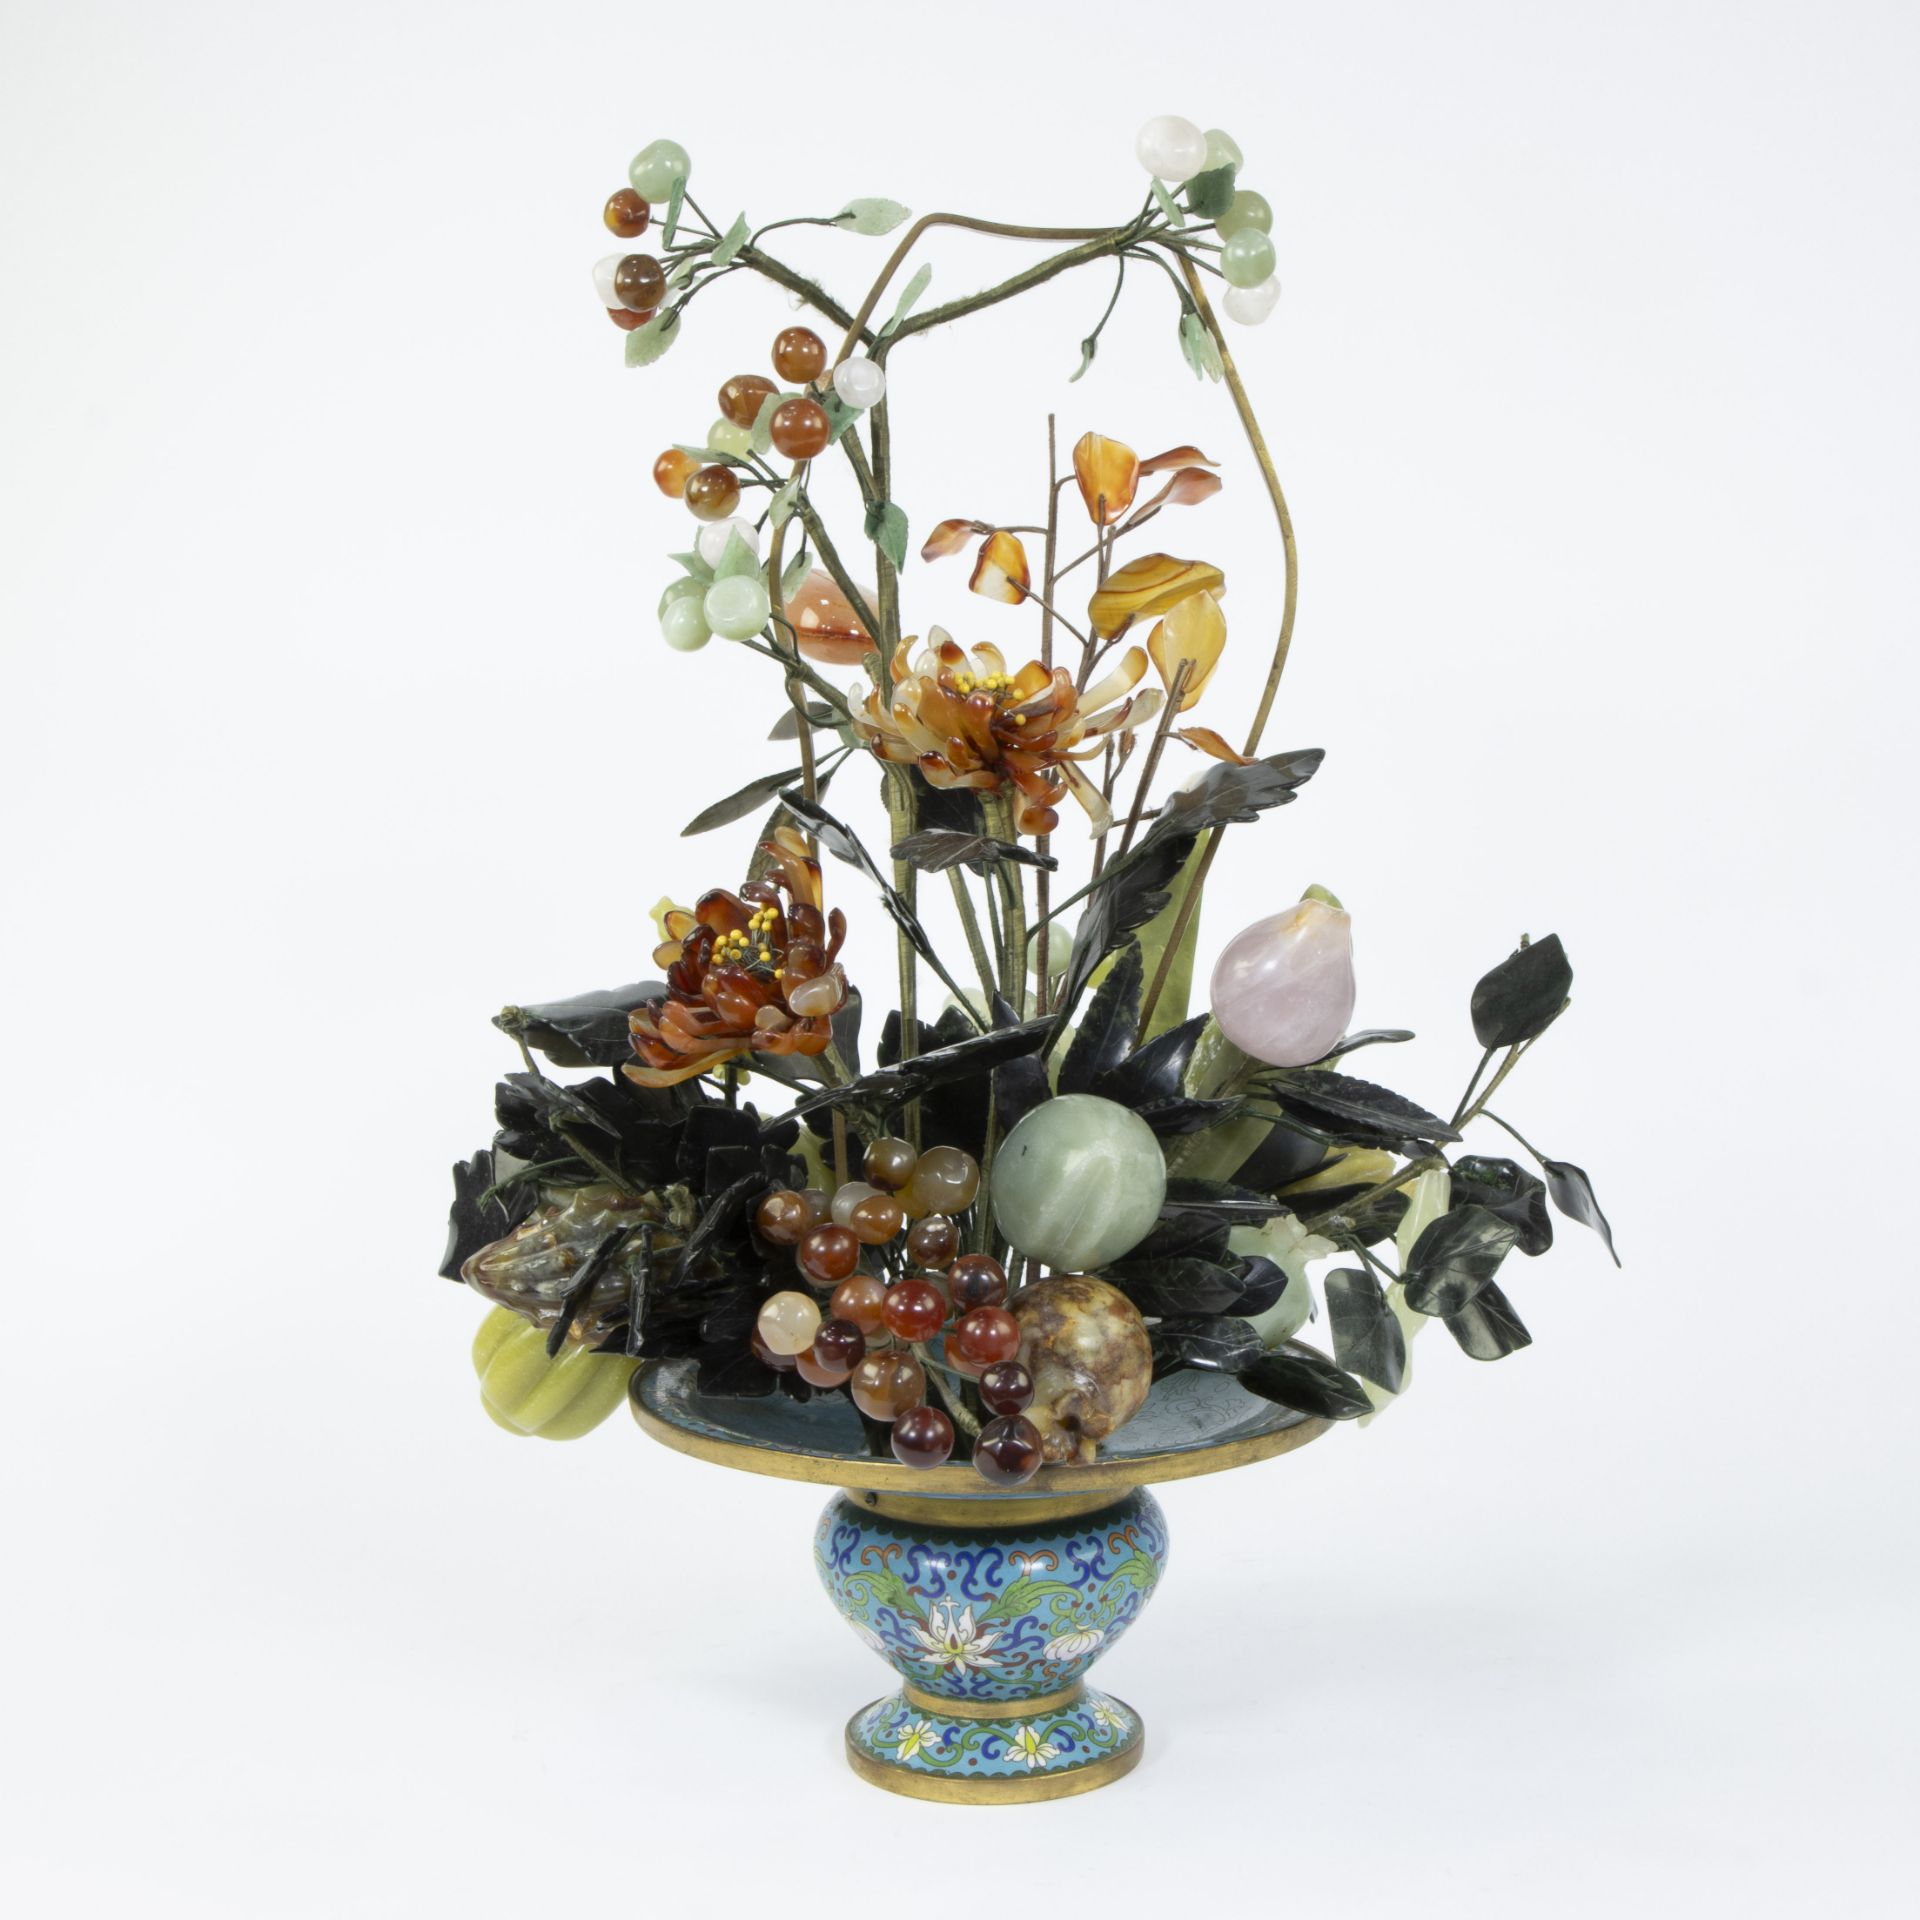 Gilt bronze Chinese cloisonne pot with a floral arrangement of hand-carved quartz glass, carnelian,